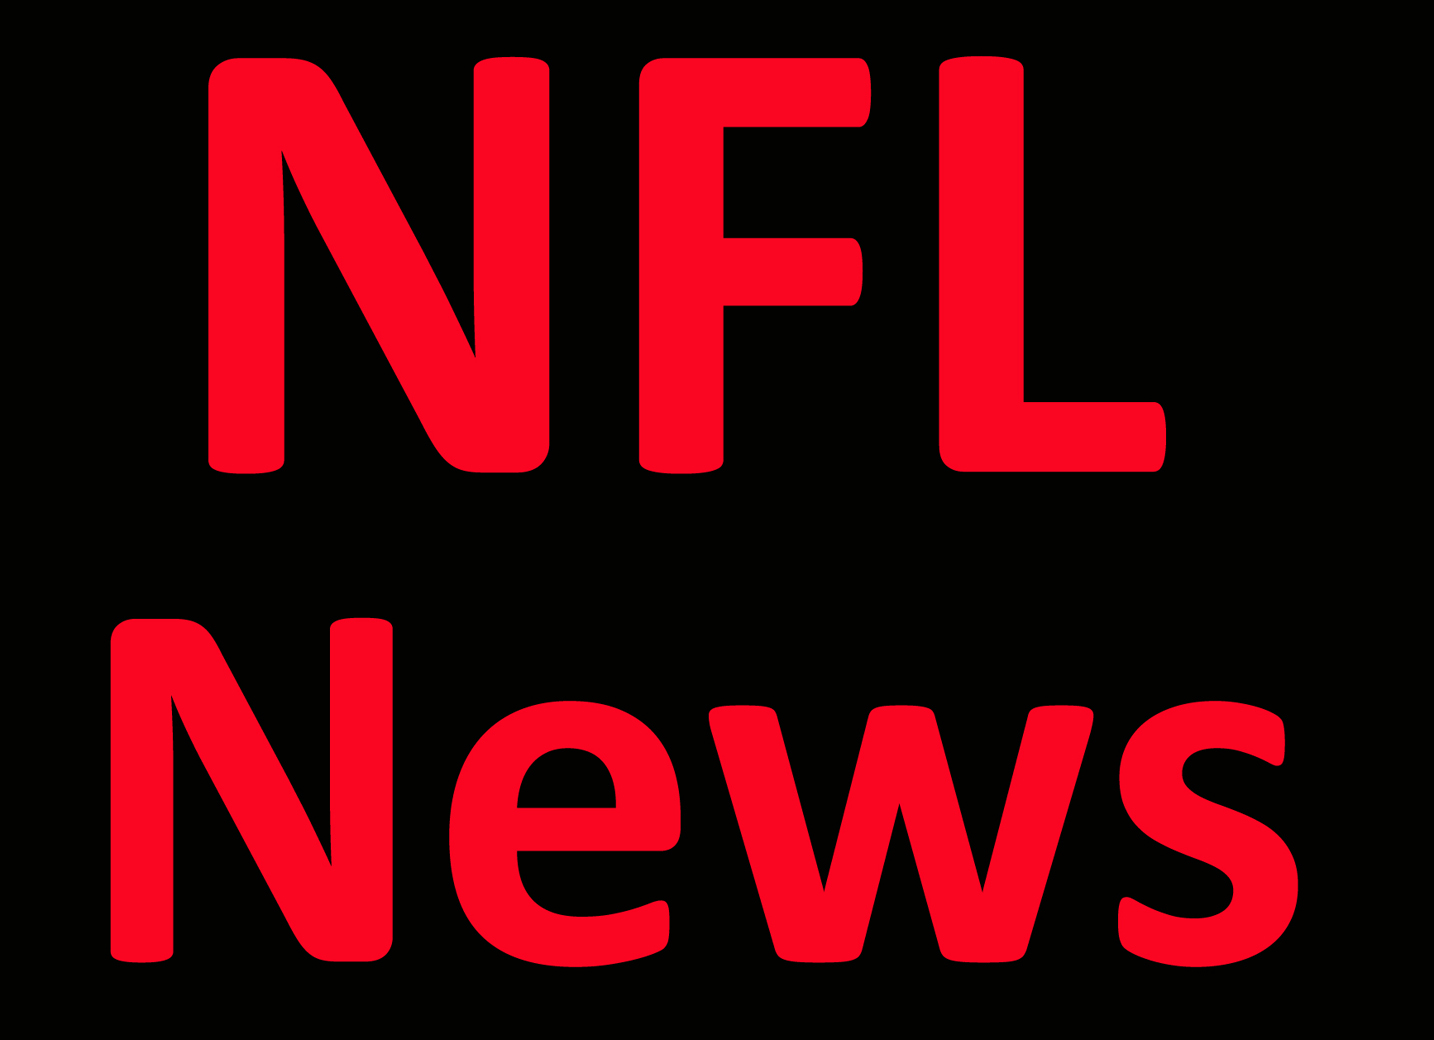 NFL News: Source: Bears claim OL Leatherwood off waivers Per Report